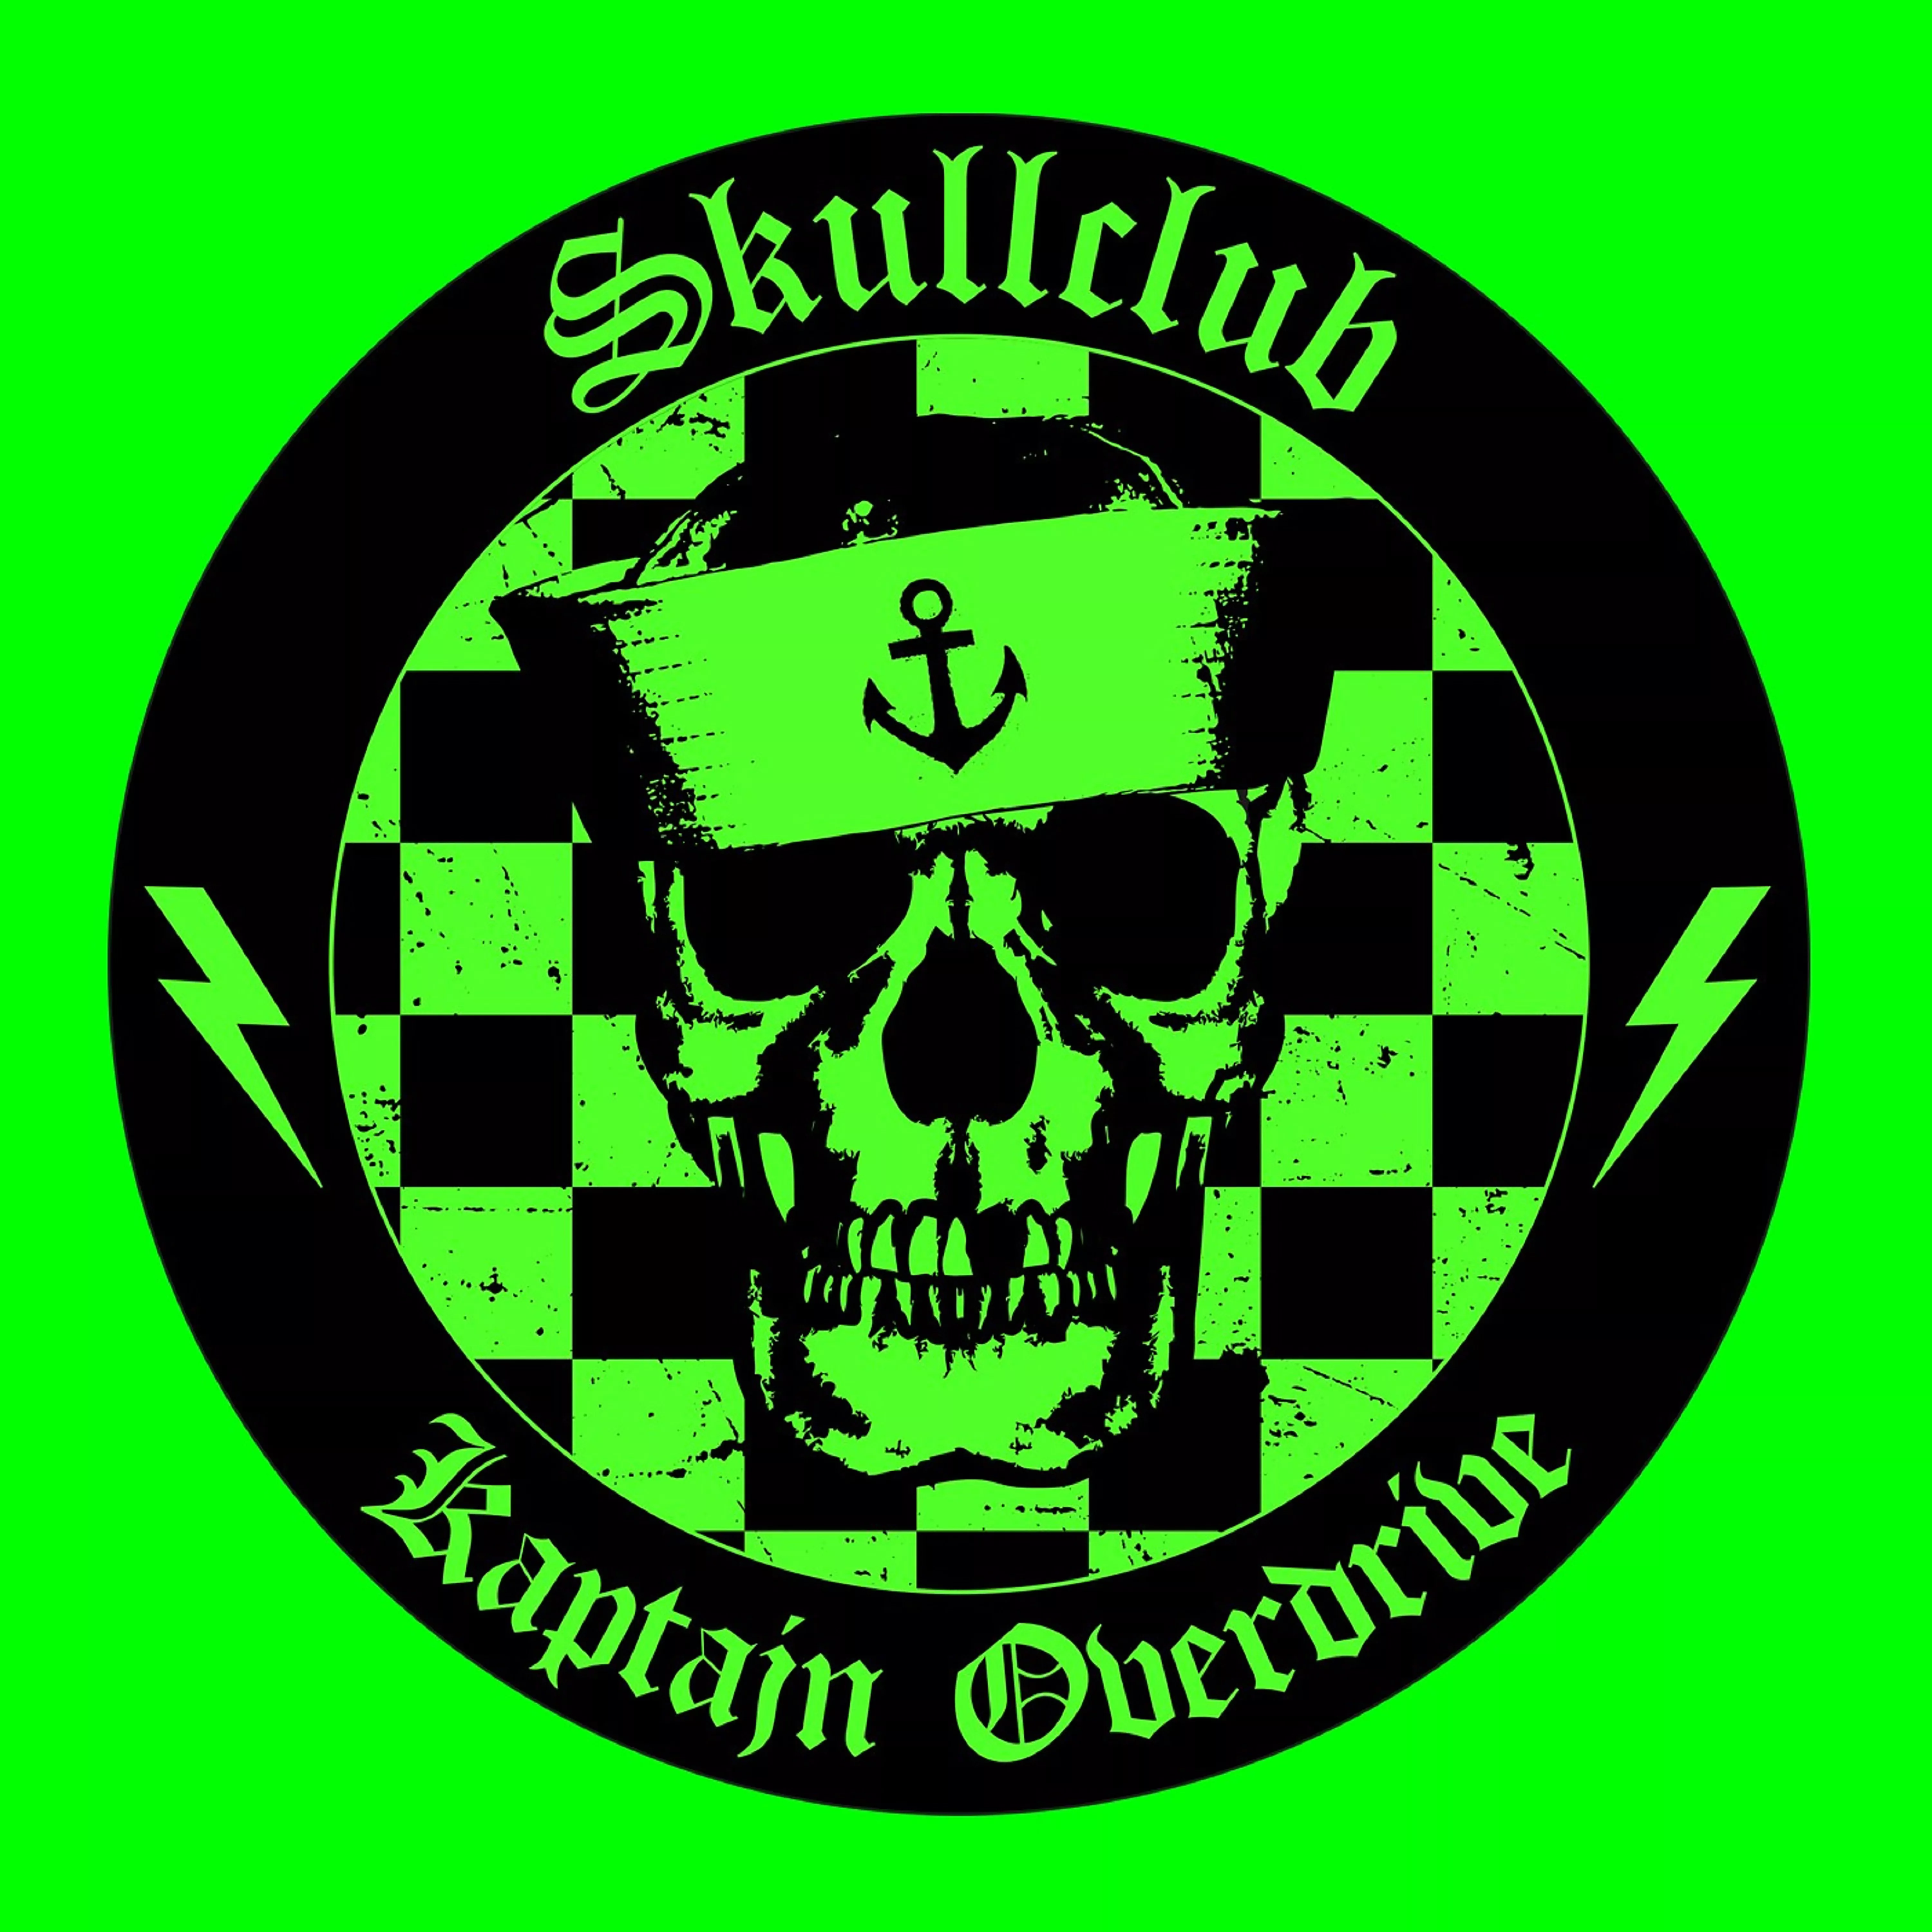 Kaptajn Overdrive - Skullclub 